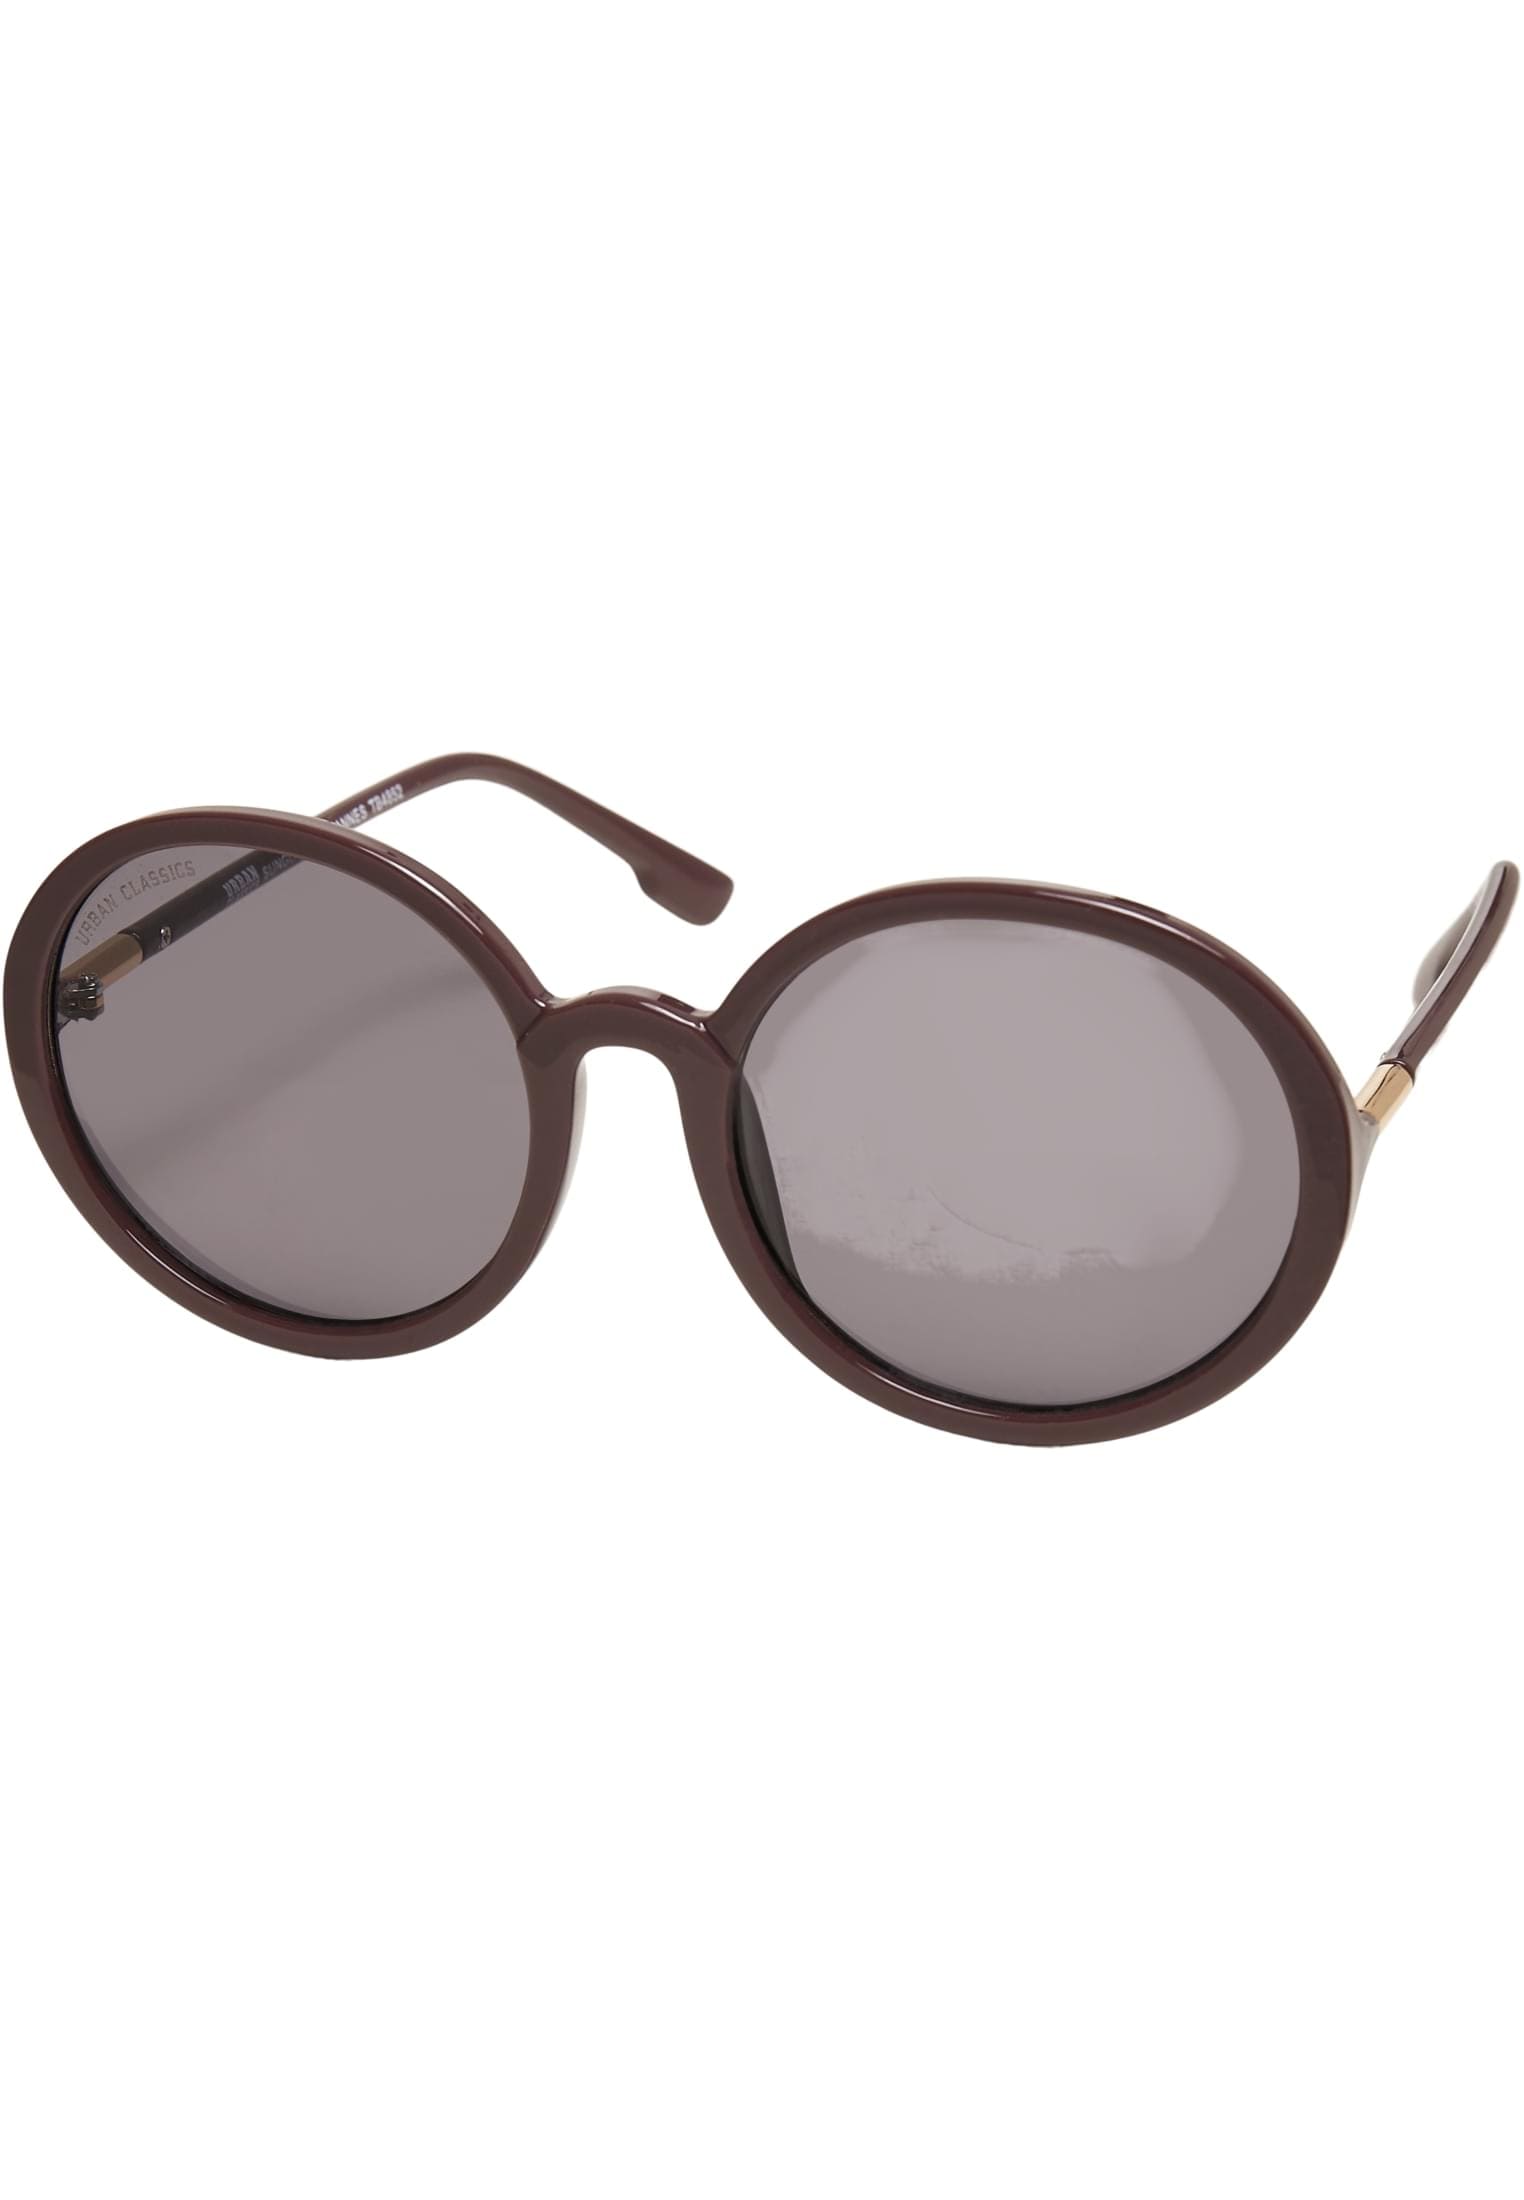 CLASSICS | Sunglasses I\'m bestellen URBAN »Accessoires walking Chain« Cannes Sonnenbrille with